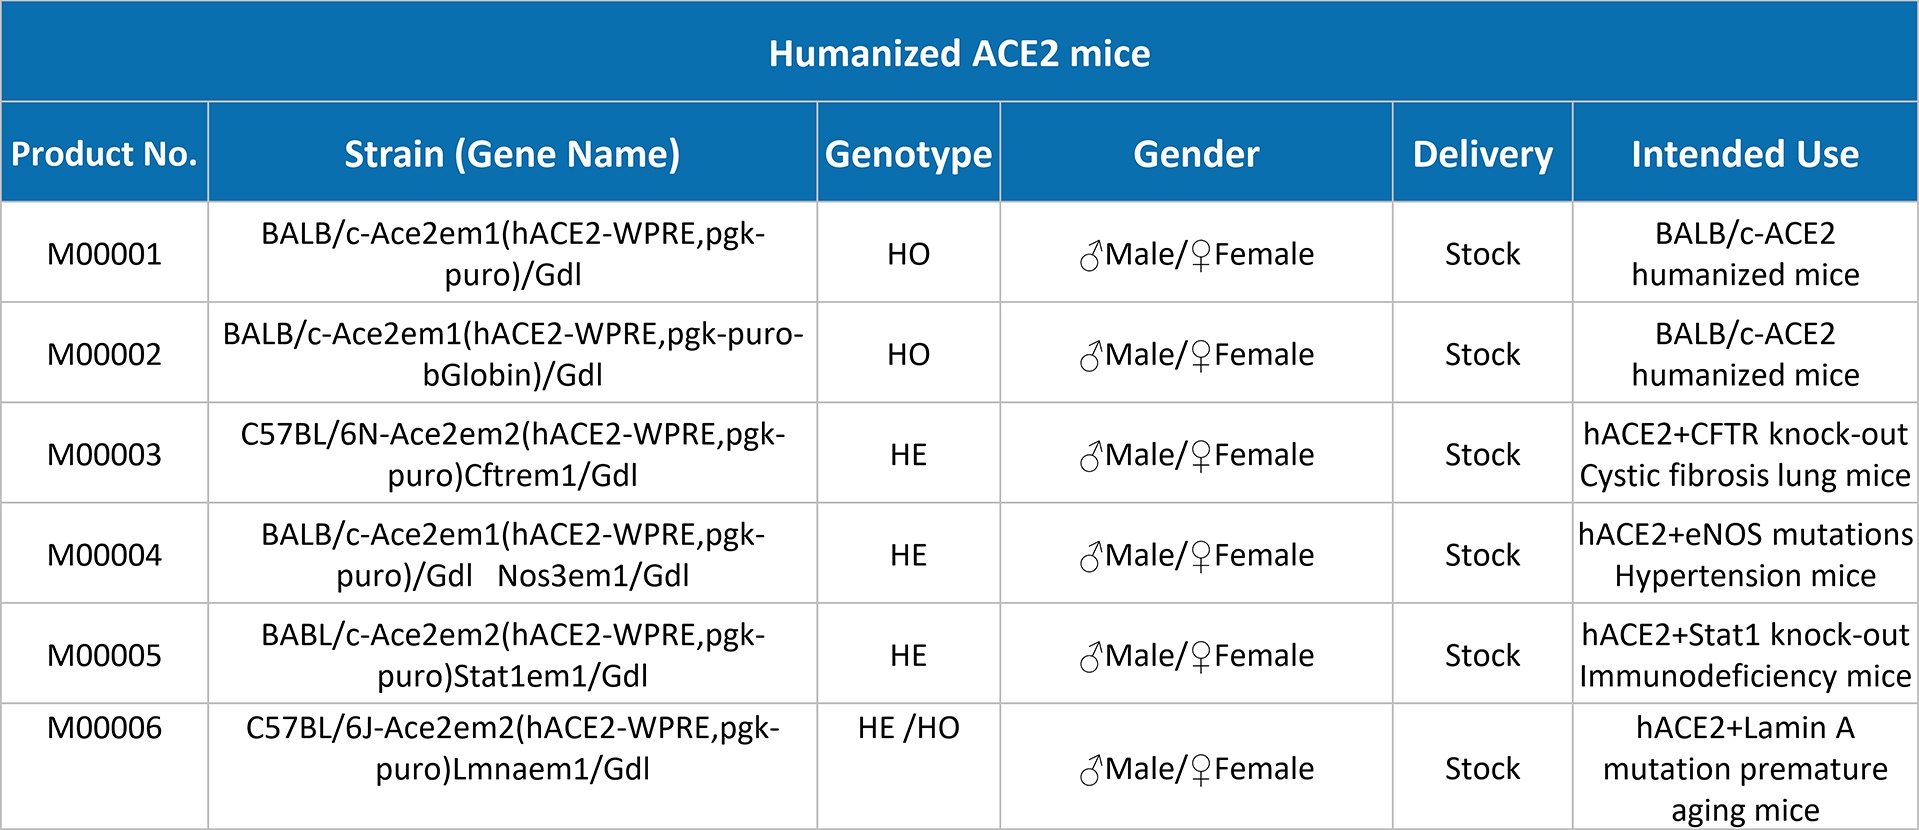 Humanizirani ACE2 miševi